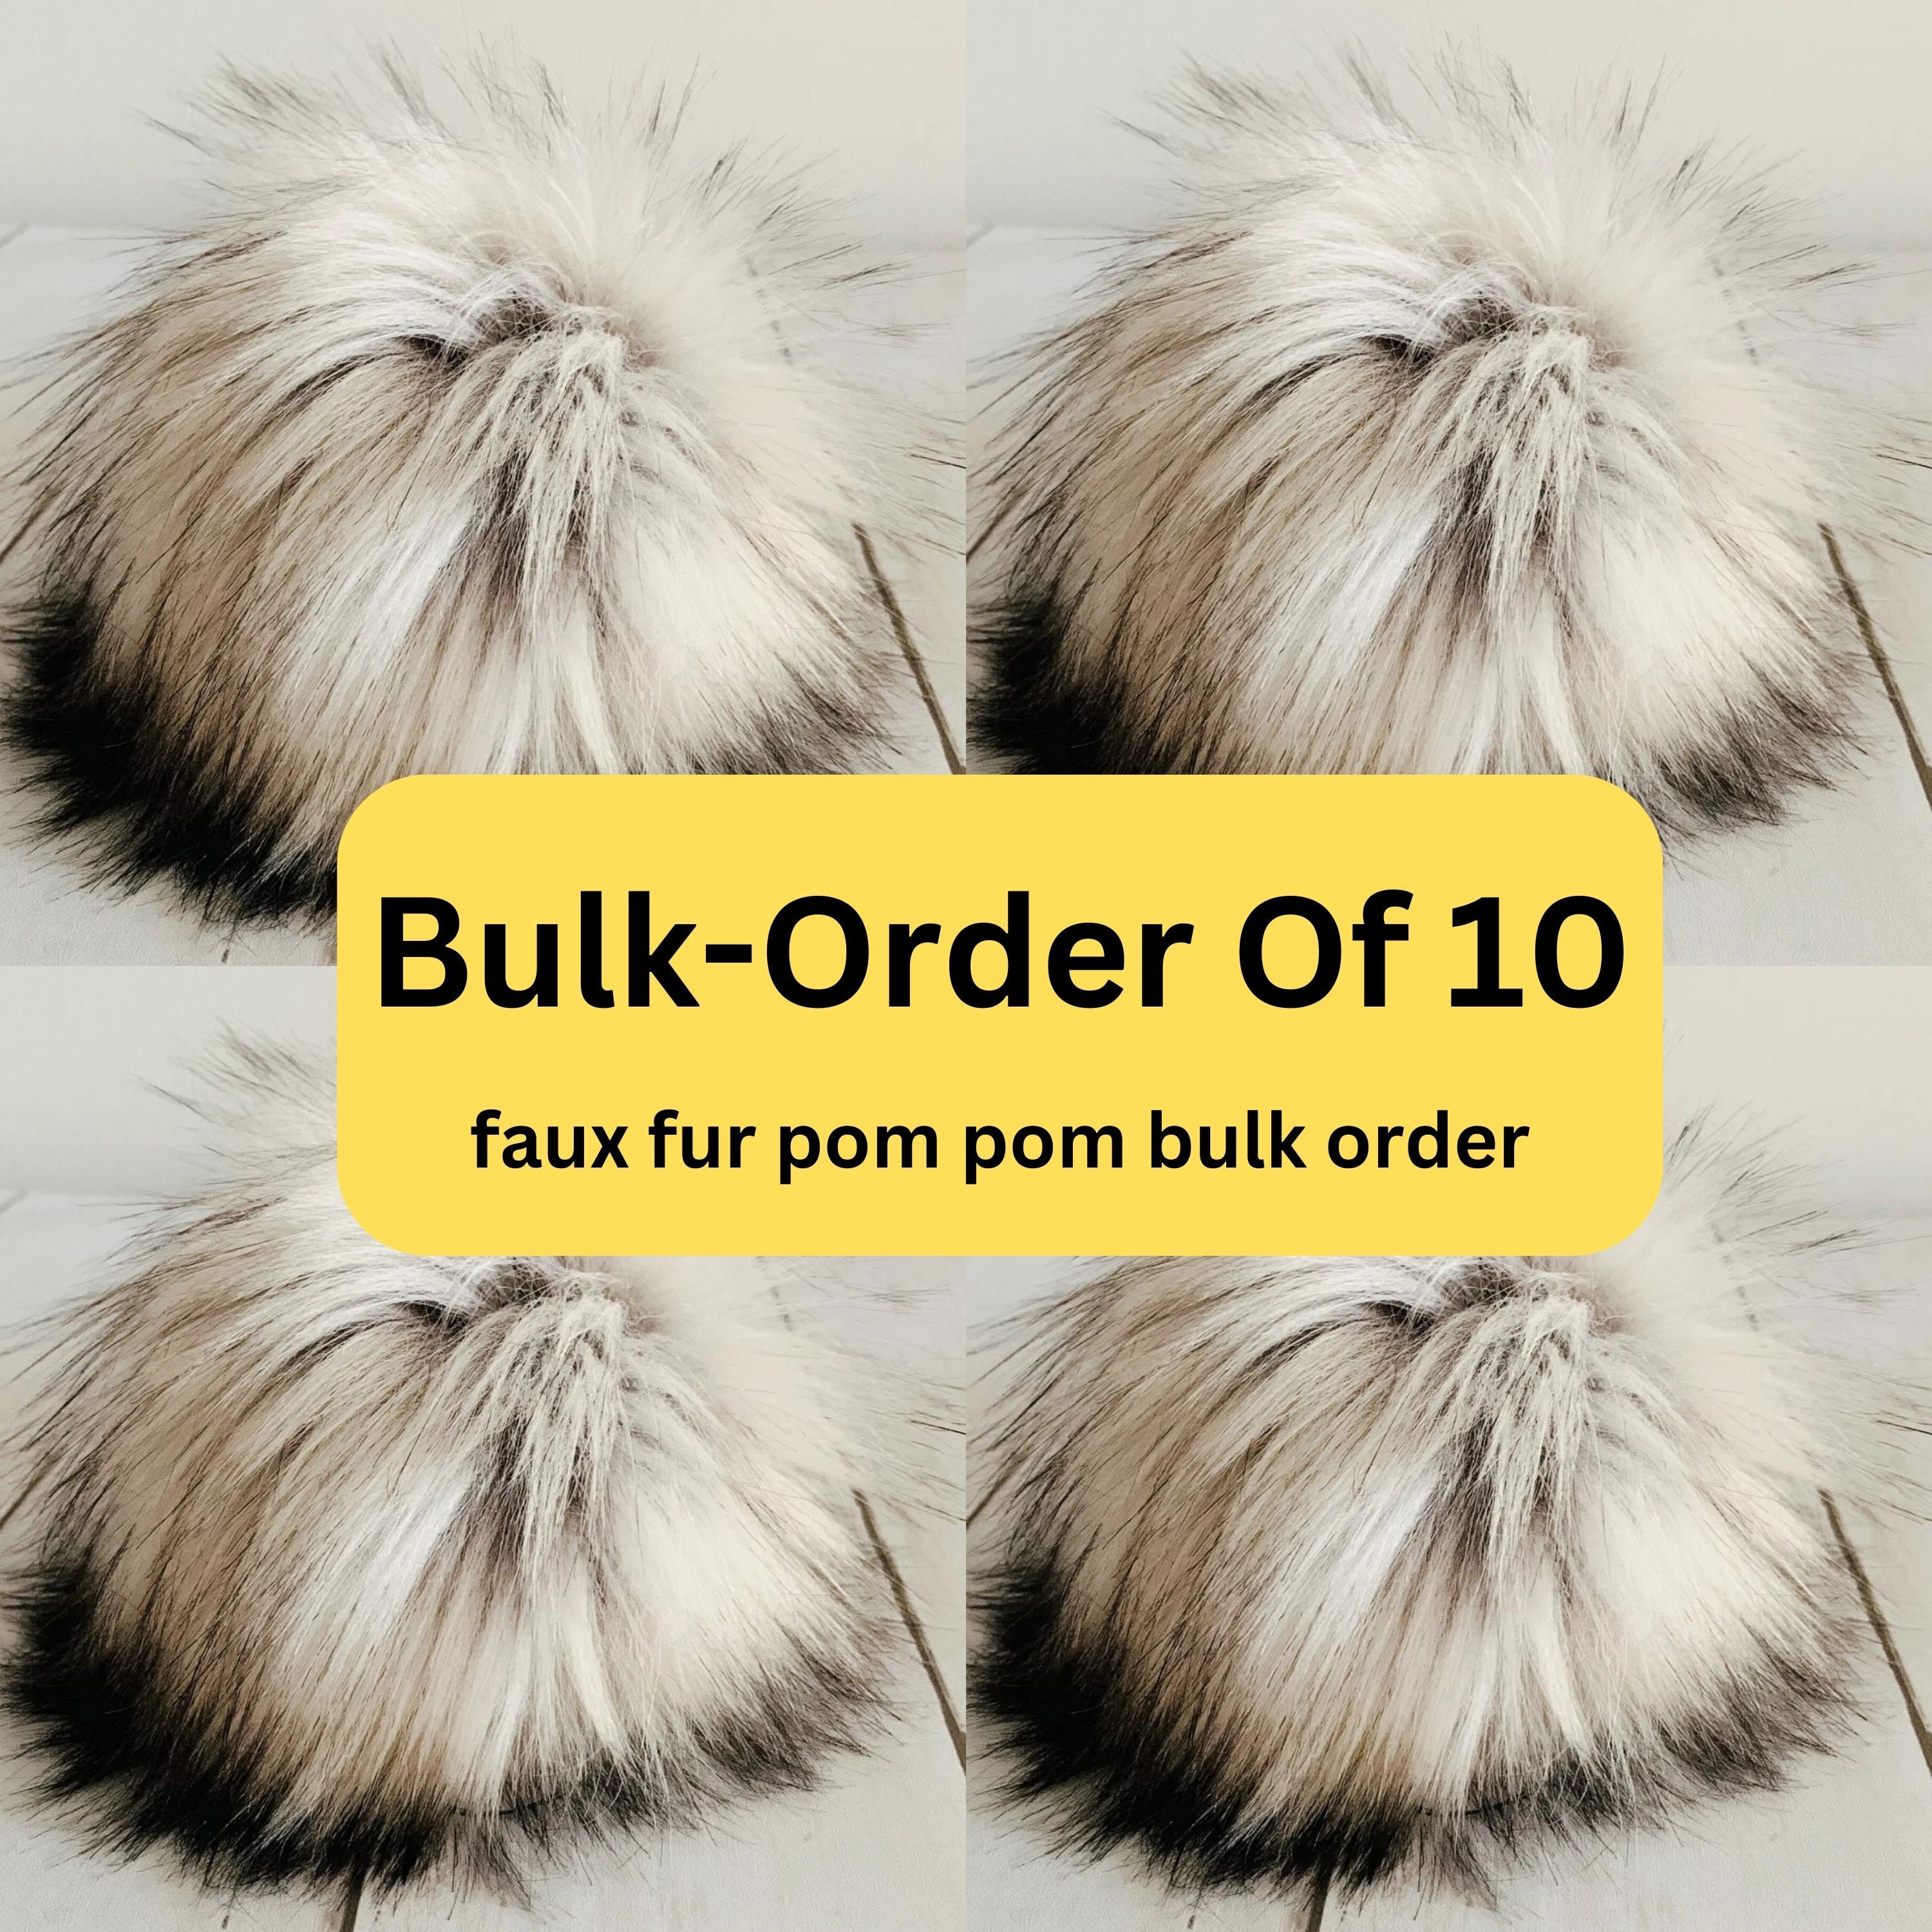 Genuine Wholesale wholesale faux fur pom poms For Old World Style